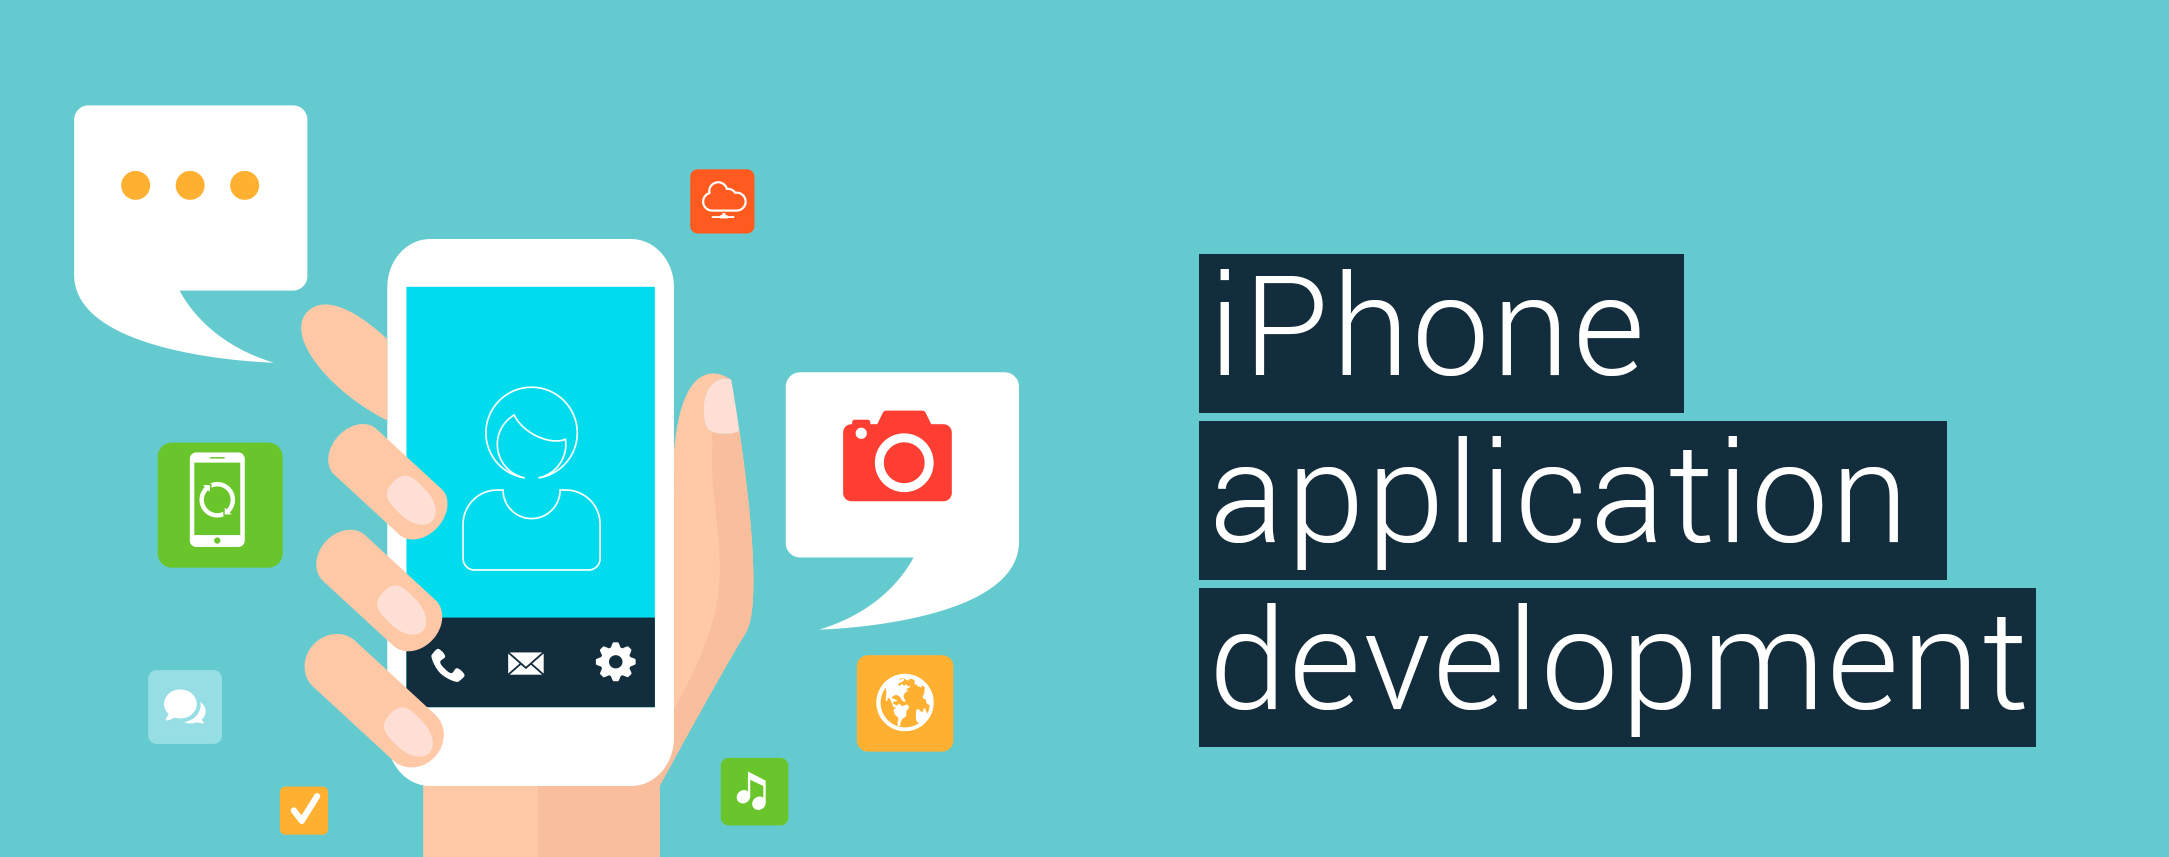 Iphone App Development & Design Service in Dubai